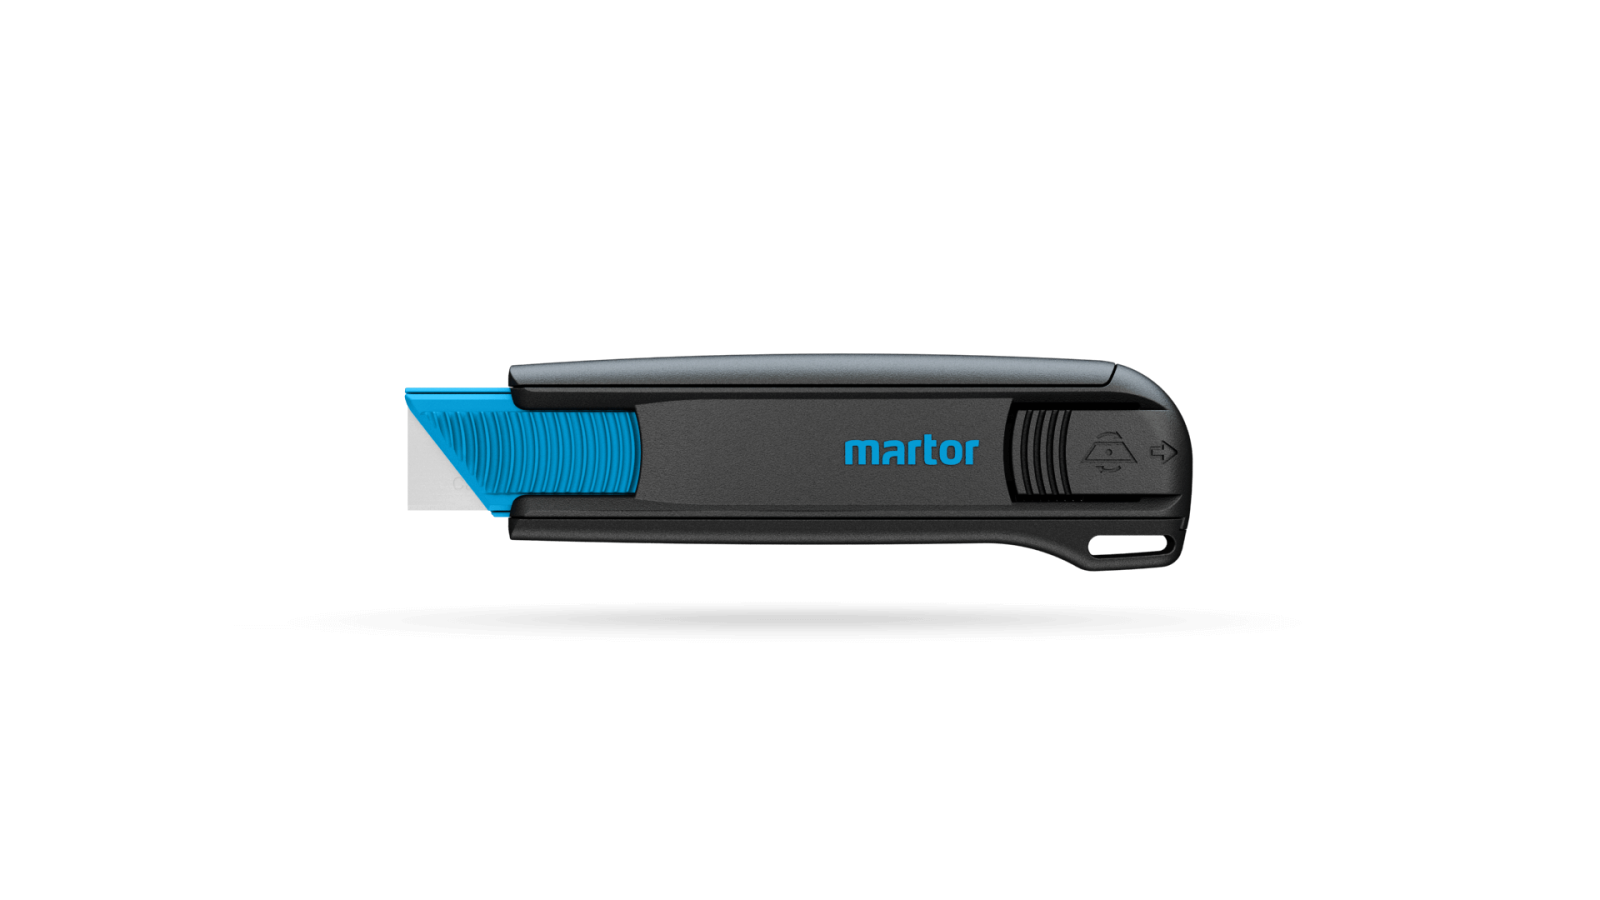 pics/Martor/Martor/martor-175001-secunorm-175-safety-knife-for-cartons.png